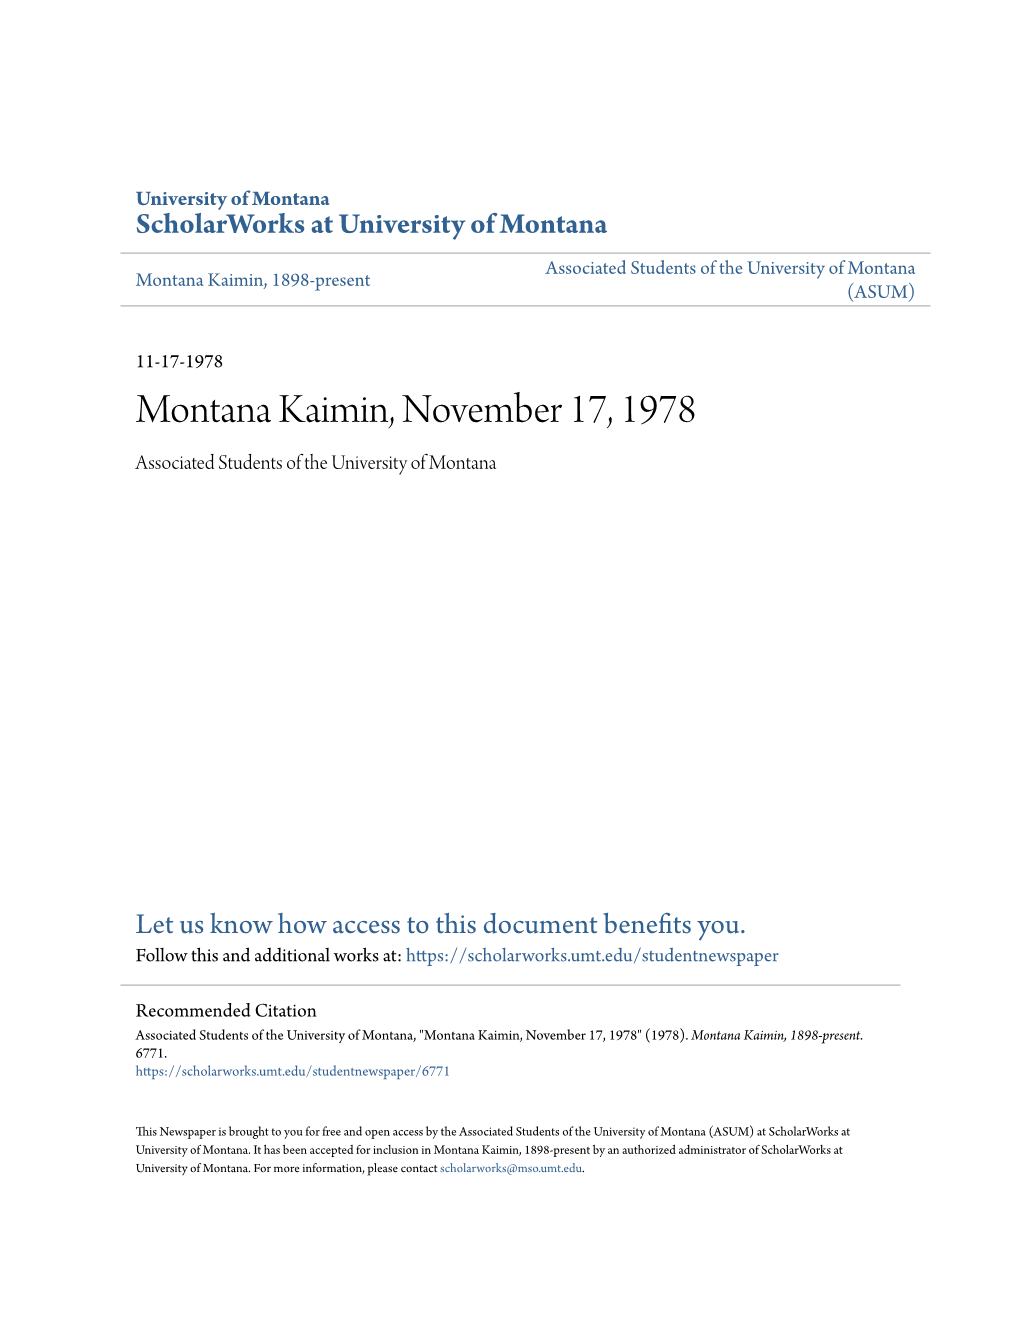 Montana Kaimin, November 17, 1978 Associated Students of the University of Montana